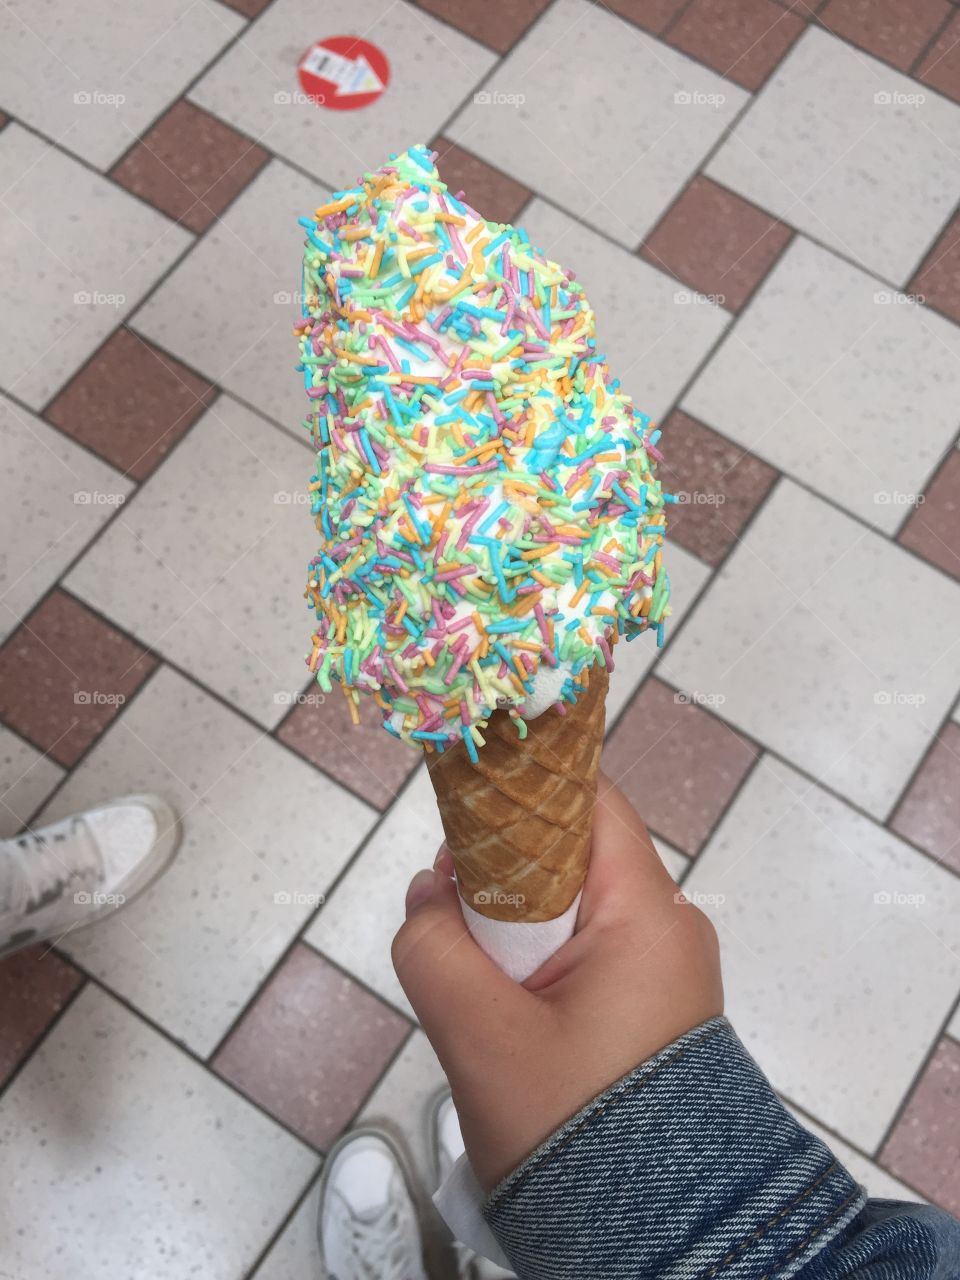 Ice cream 🍦